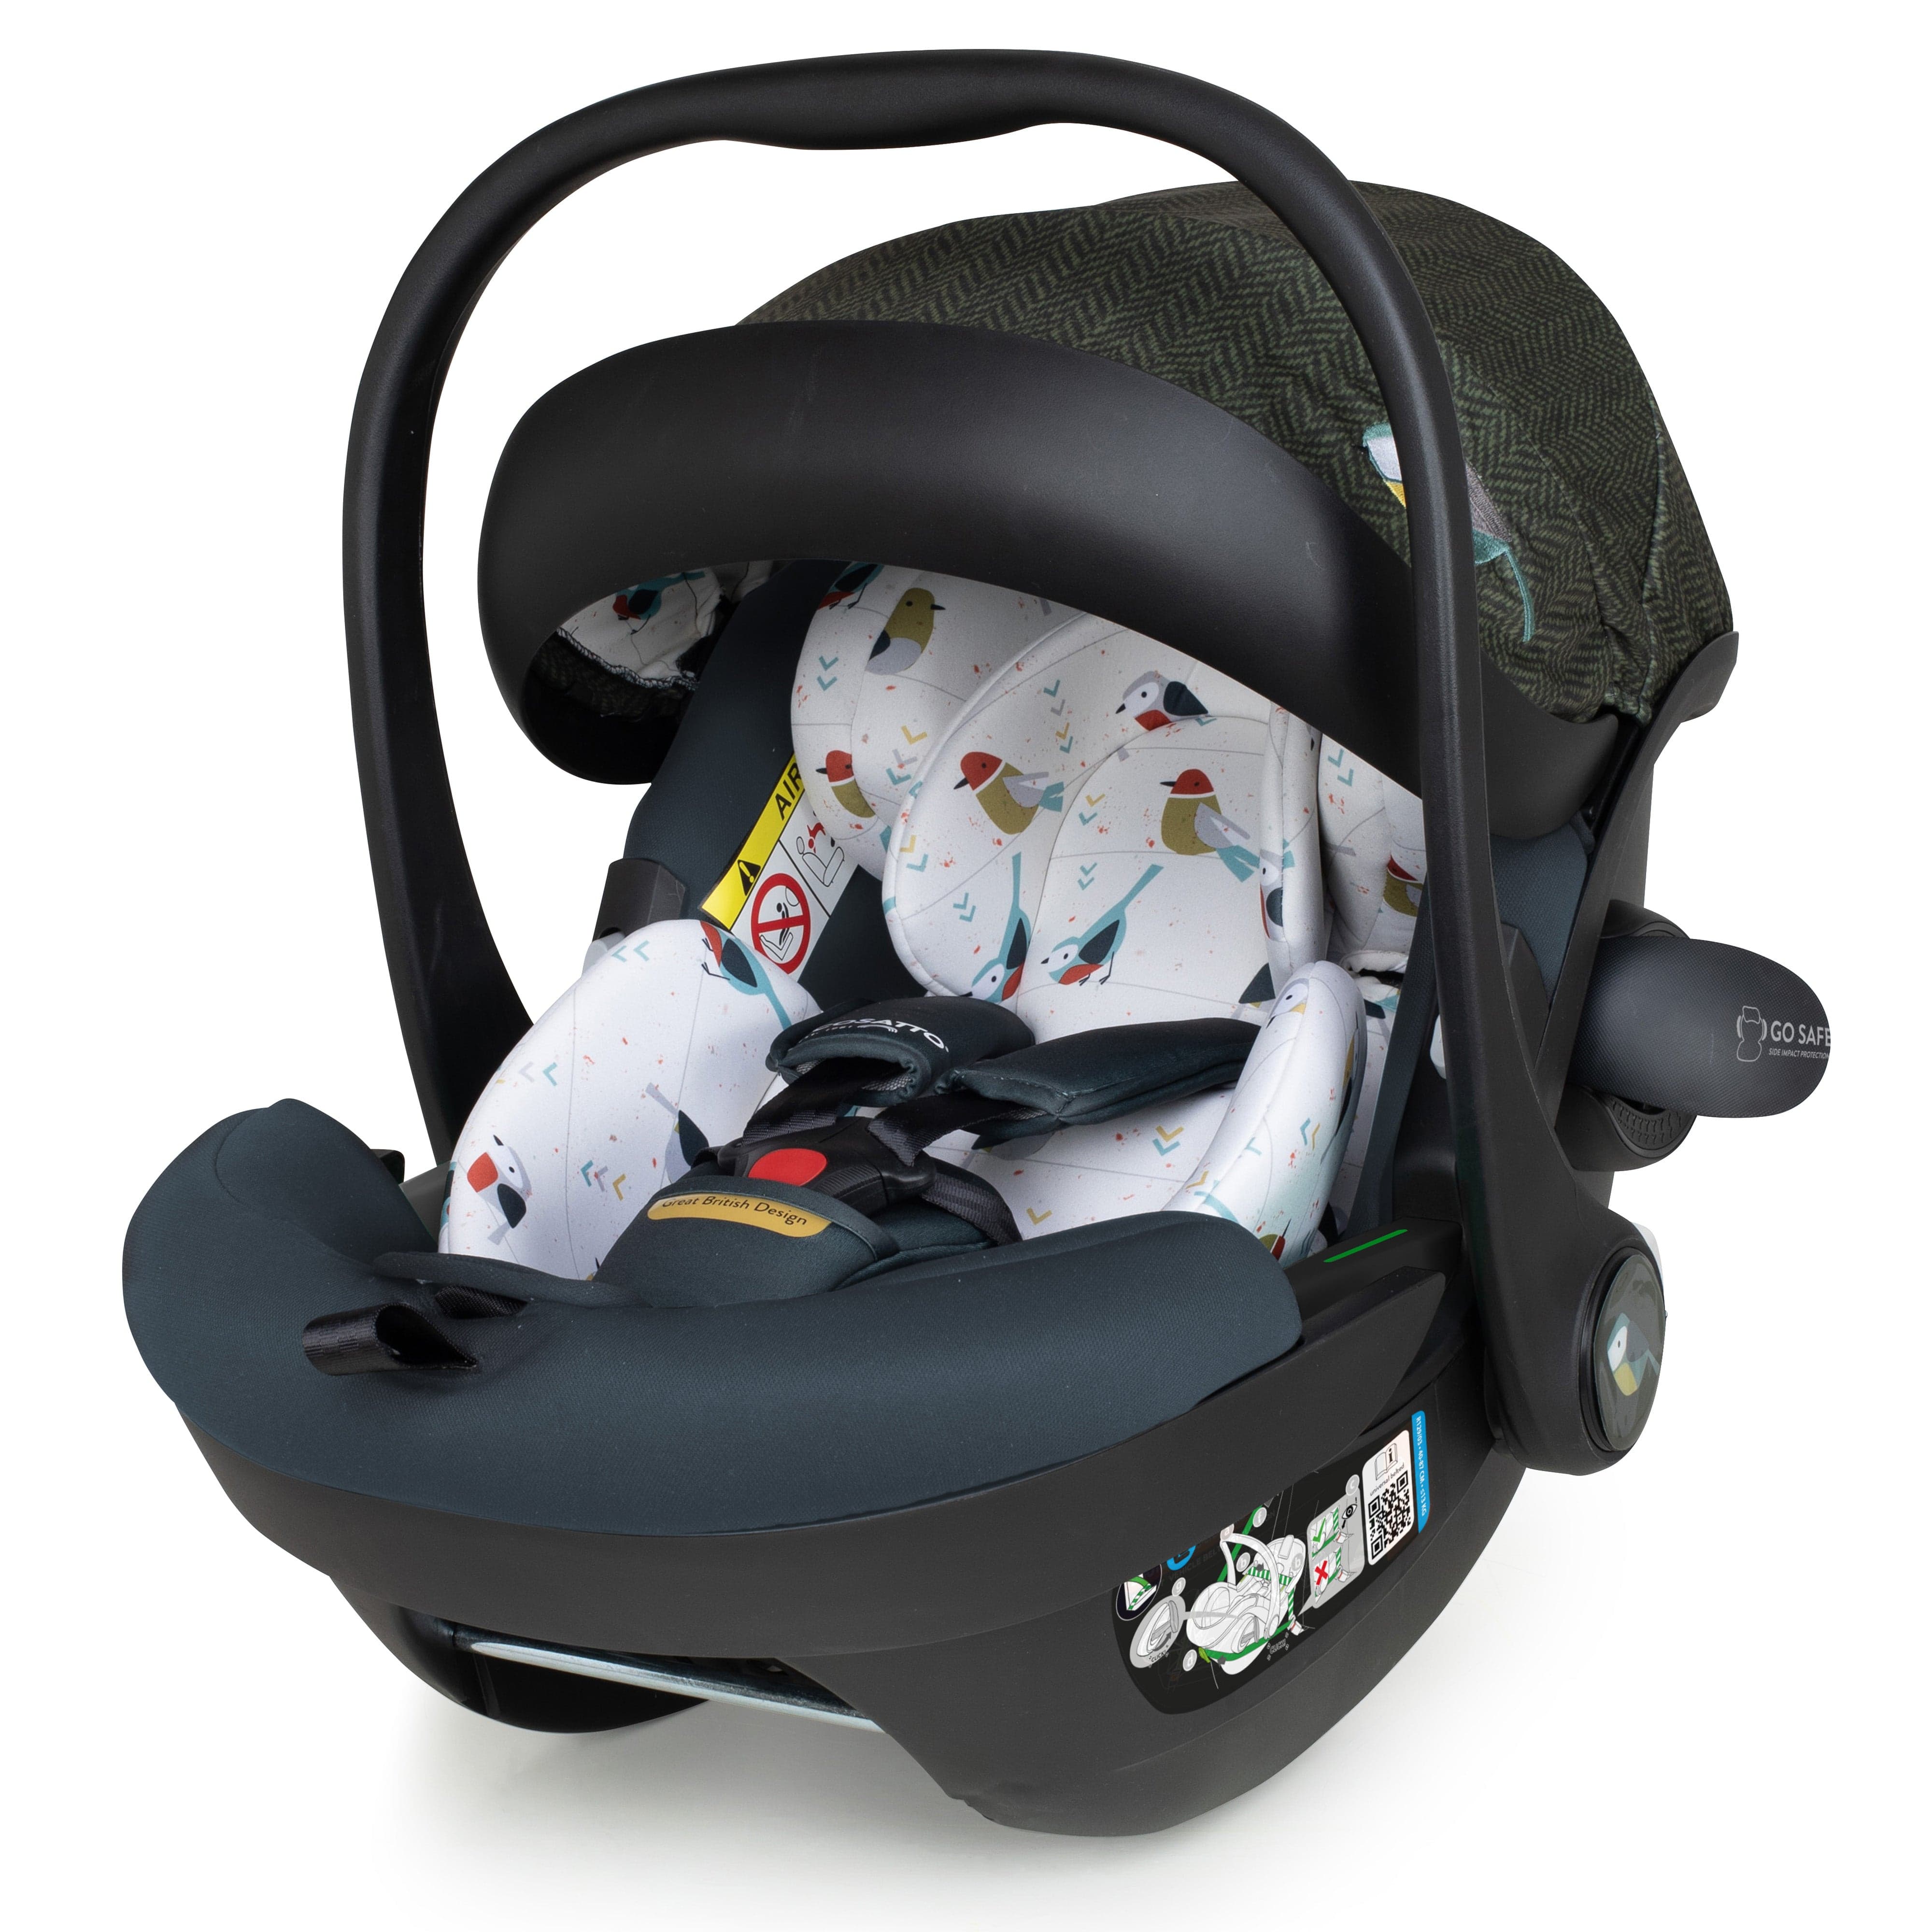 Cosatto baby car seats Cosatto Acorn i-Size Car Seat Bureau CT5232